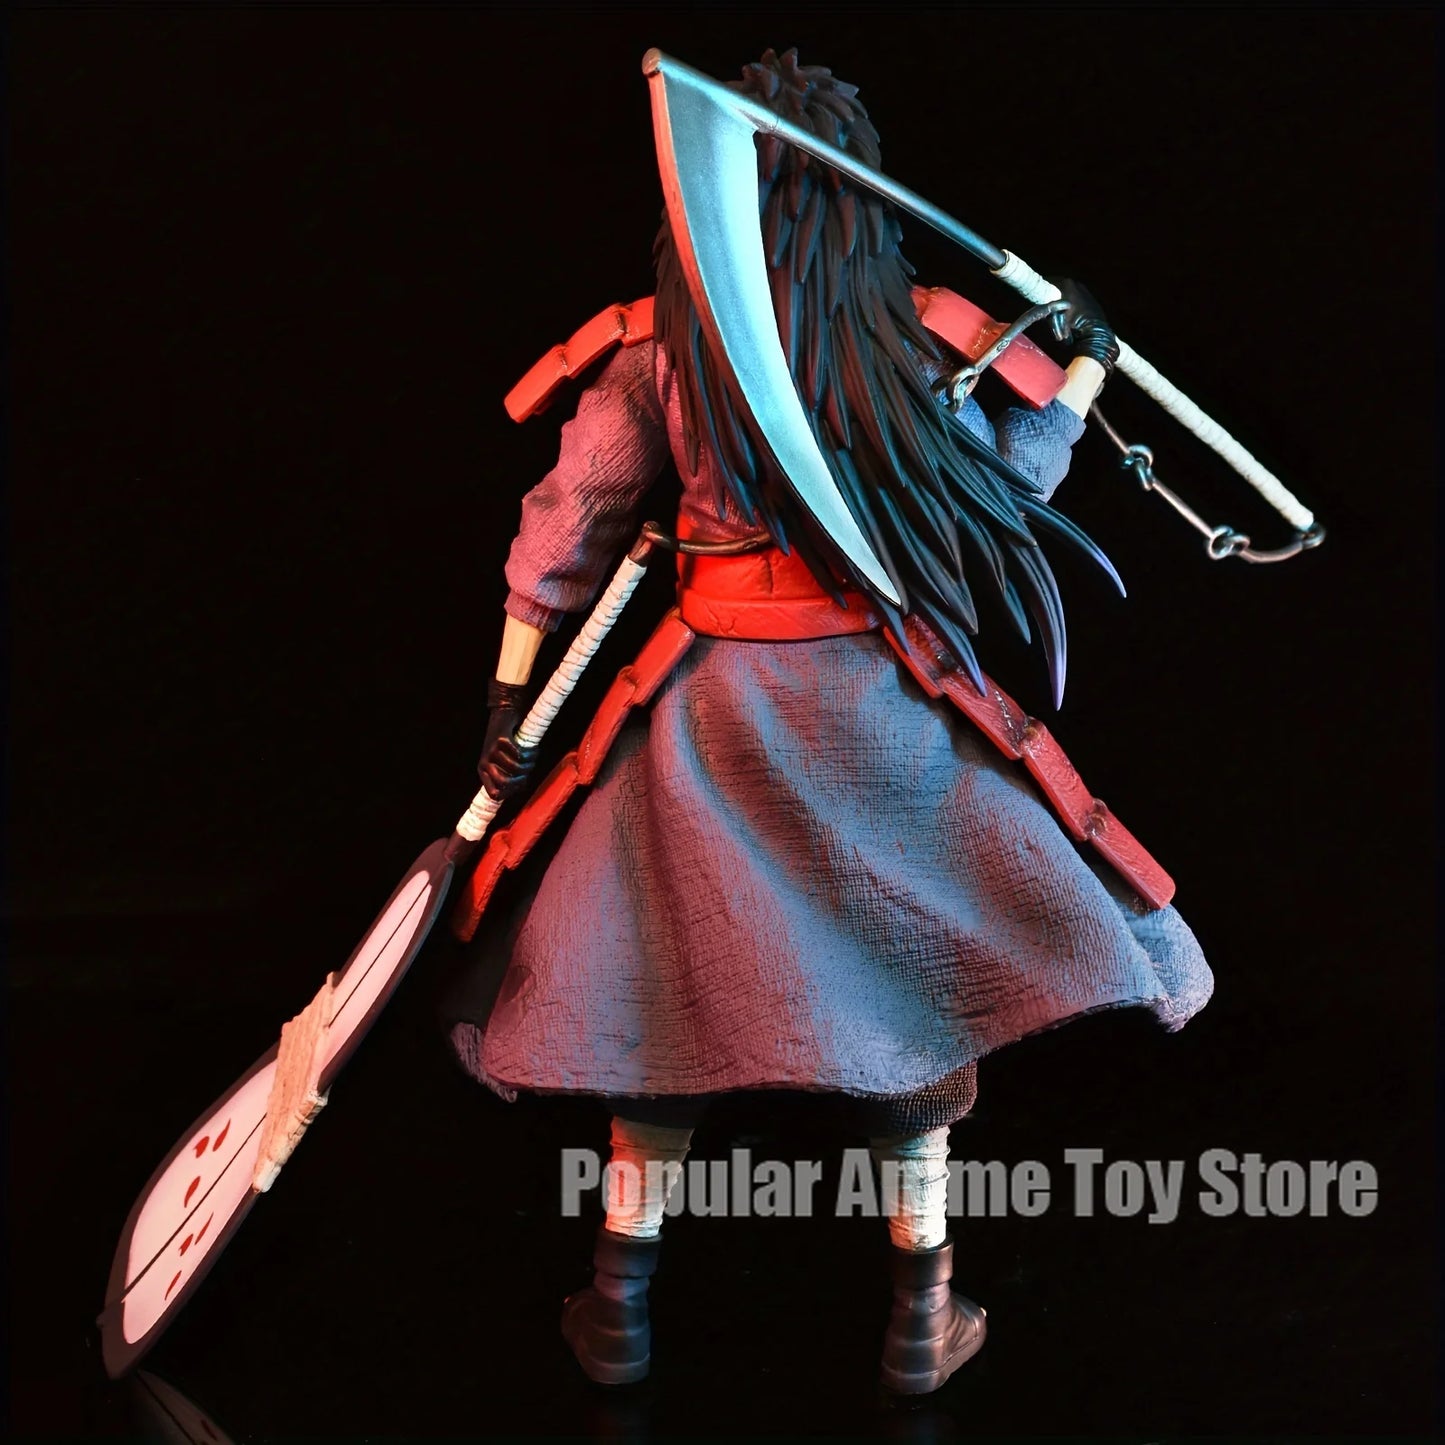 10.62in/27cm Anime Naruto Figure Uchiha Madara Fgiure Senju Hashirama Figure PVC Action Figures Collection Model Toys Gifts